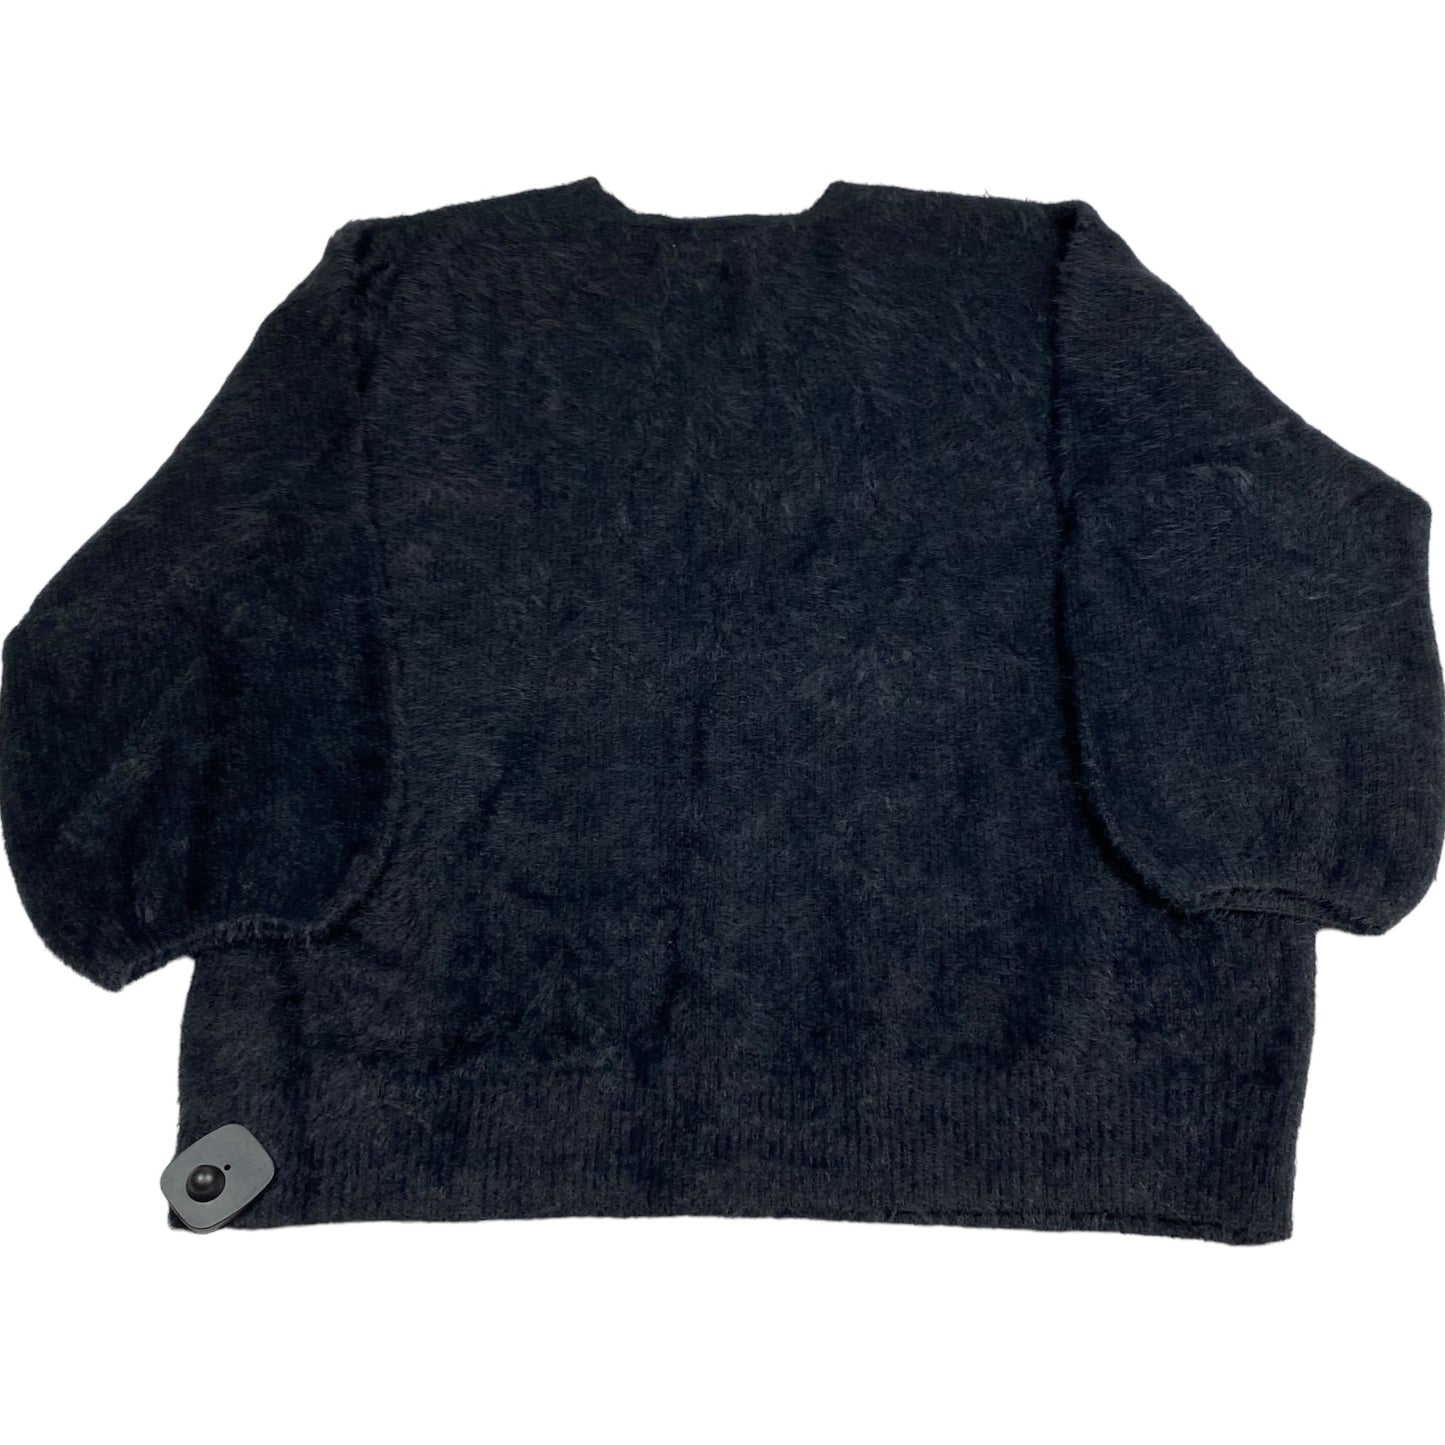 Sweater By Ava & Viv  Size: 2x